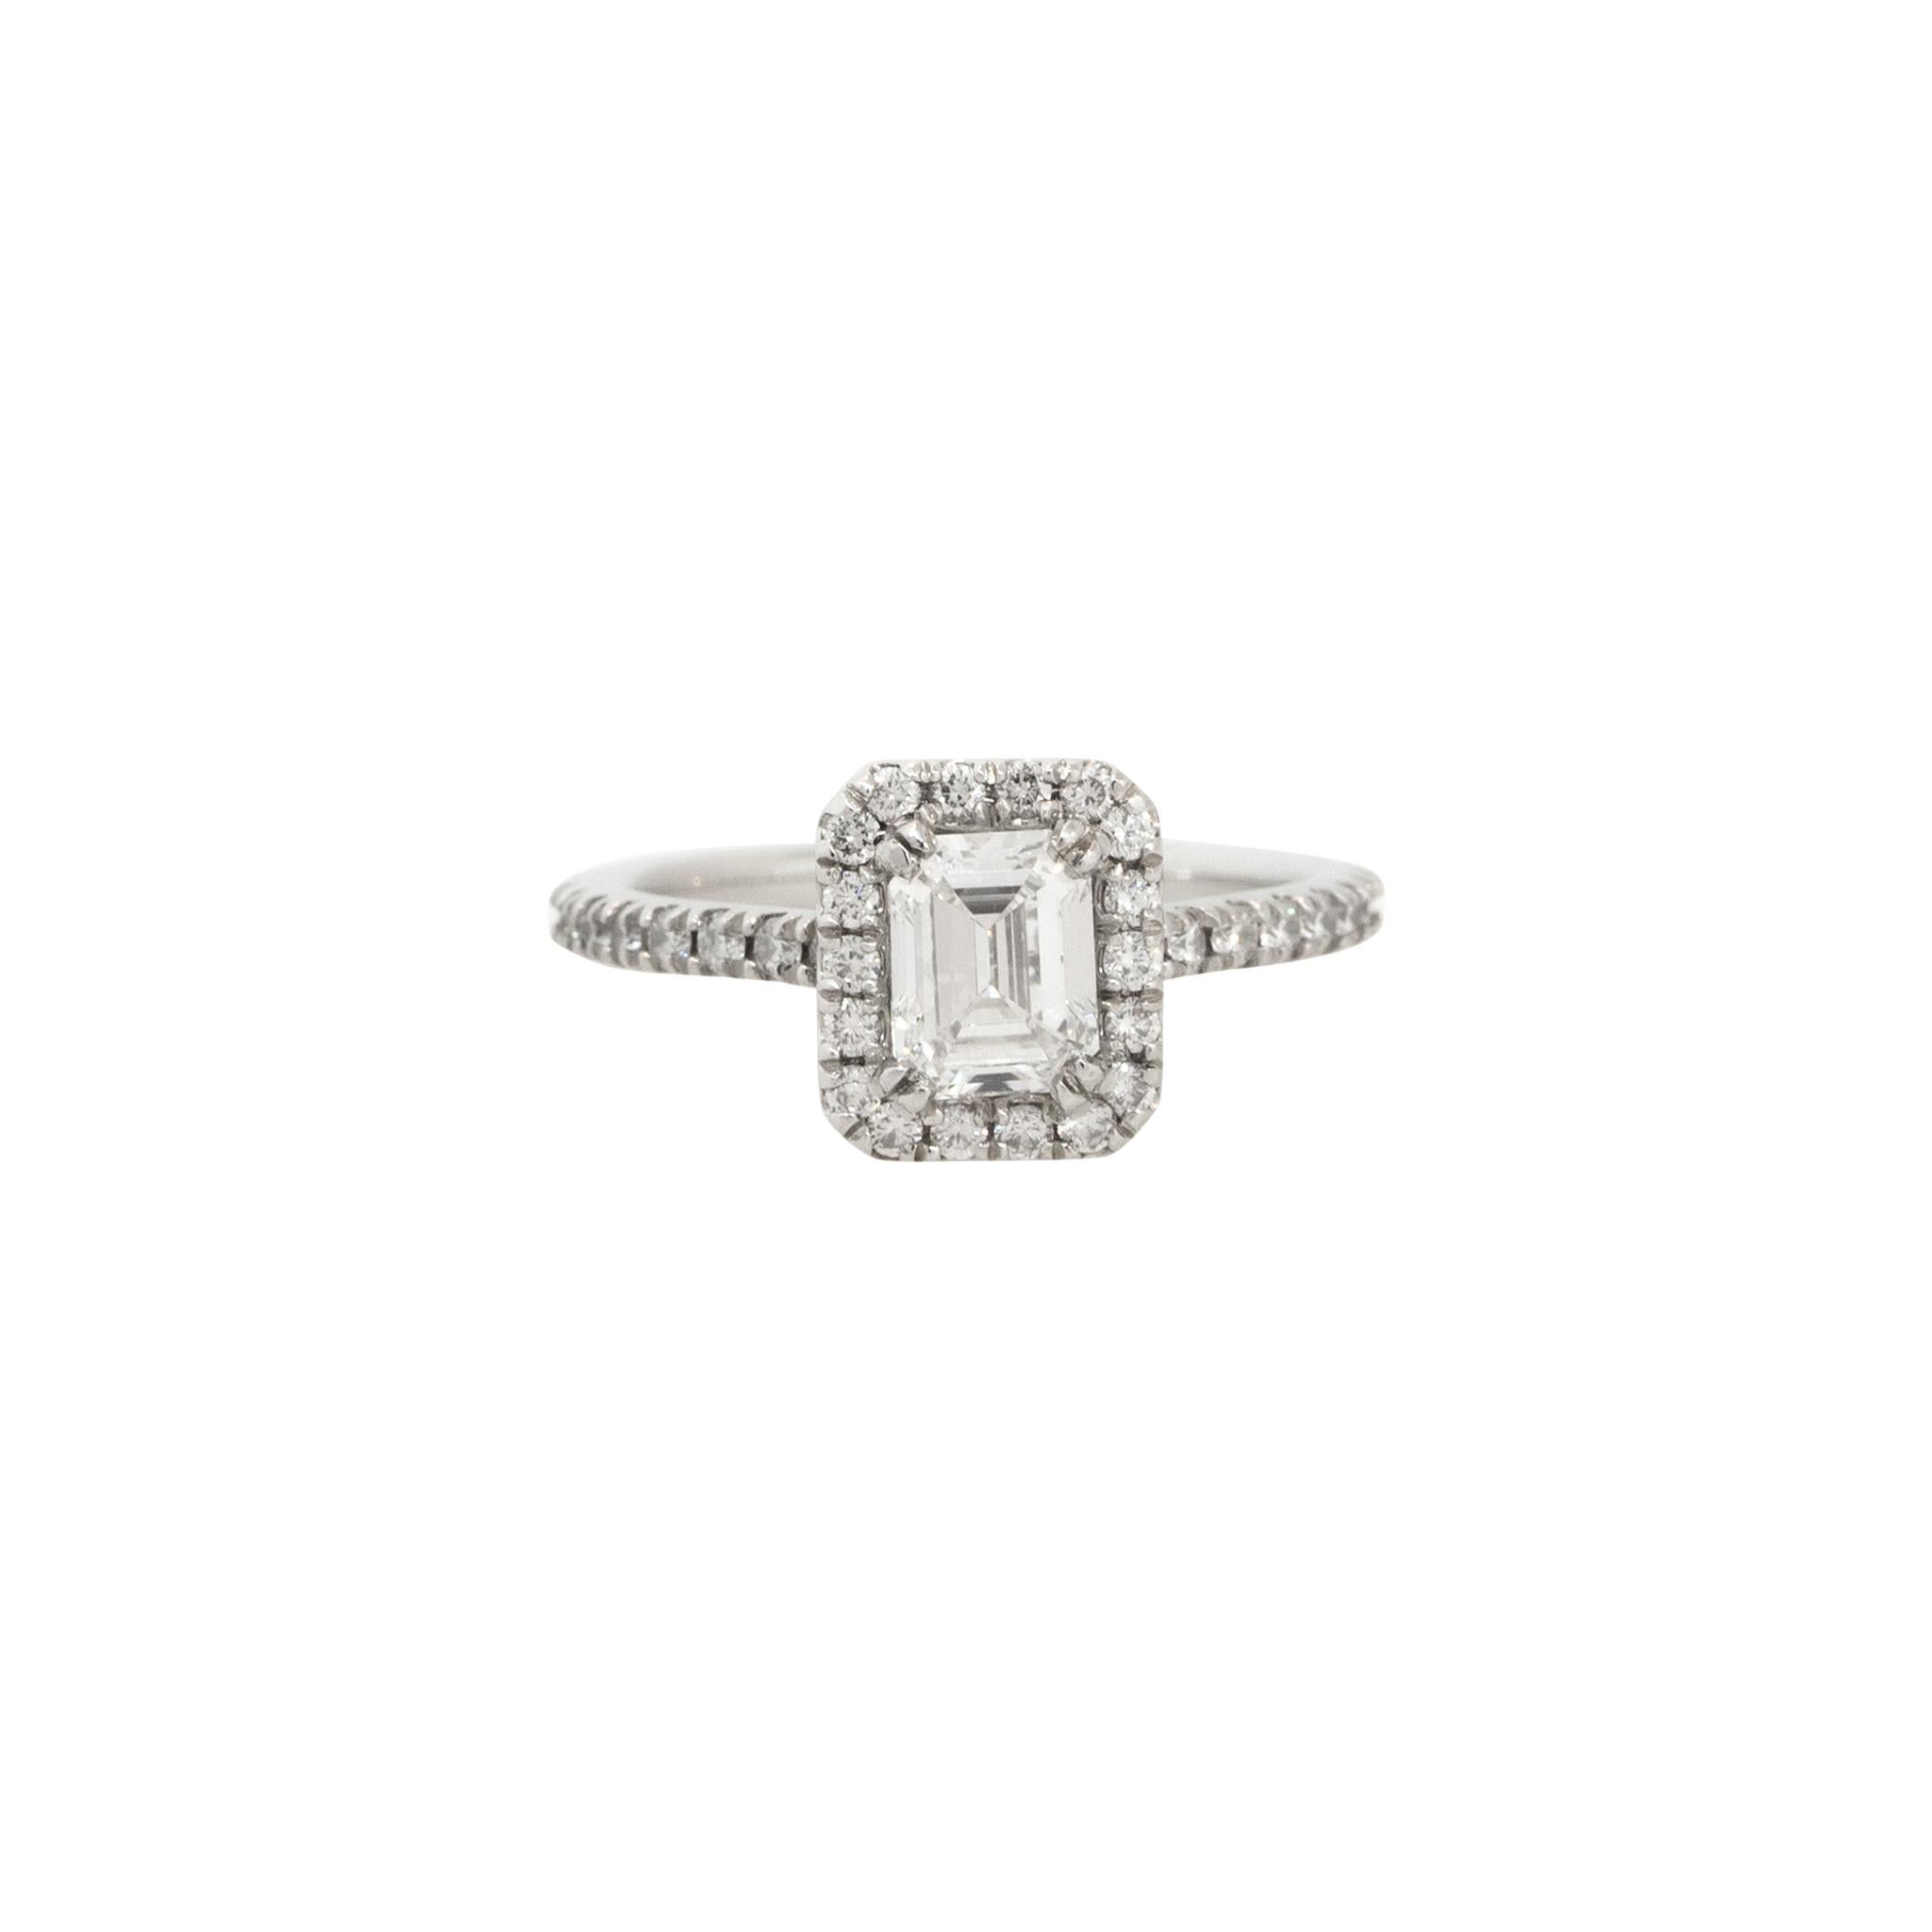 GIA Certified Platinum 1.58ctw Emerald Cut Diamond Engagement Ring

Material: Platinum
Main Diamond Details: Approx. 0.83ctw Emerald Cut Diamond. Center Diamond is GIA Certified (#1166509213). Center Diamond is F in color and VVS1 in clarity
Accent